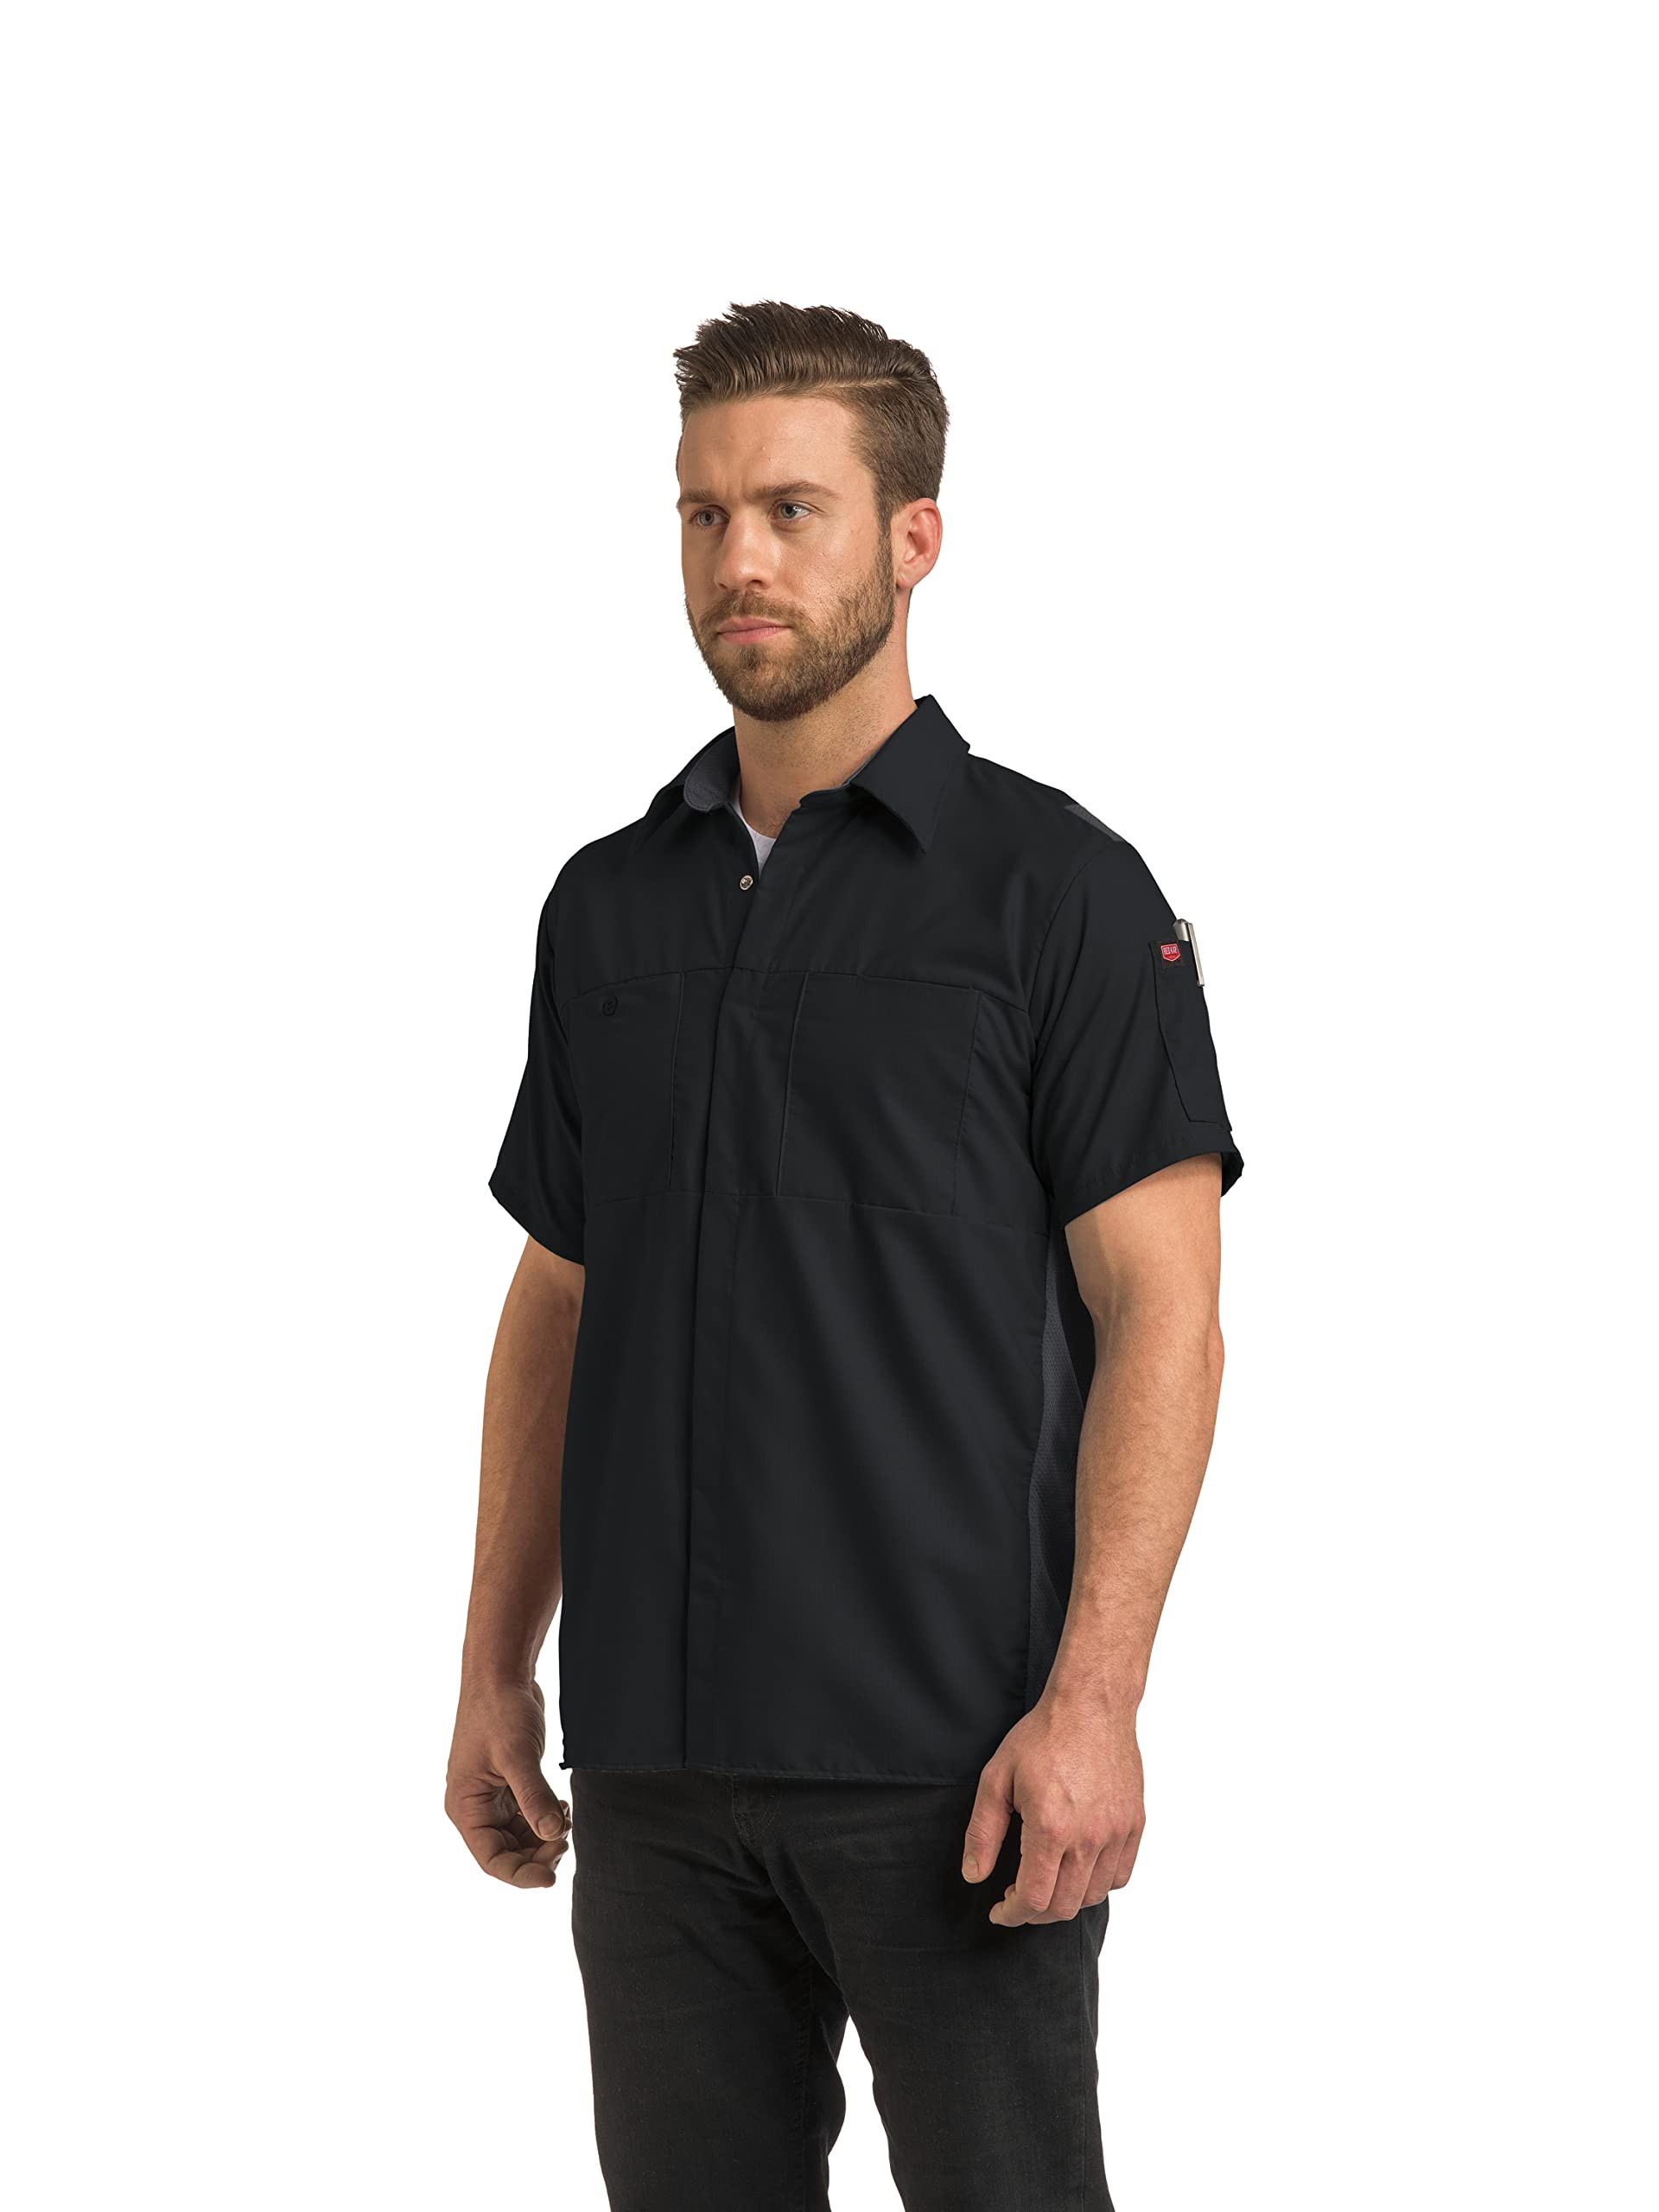 Red Kap Men's Standard Short Sleeve Performance Plus Shop Shirt with Oilblok Technology